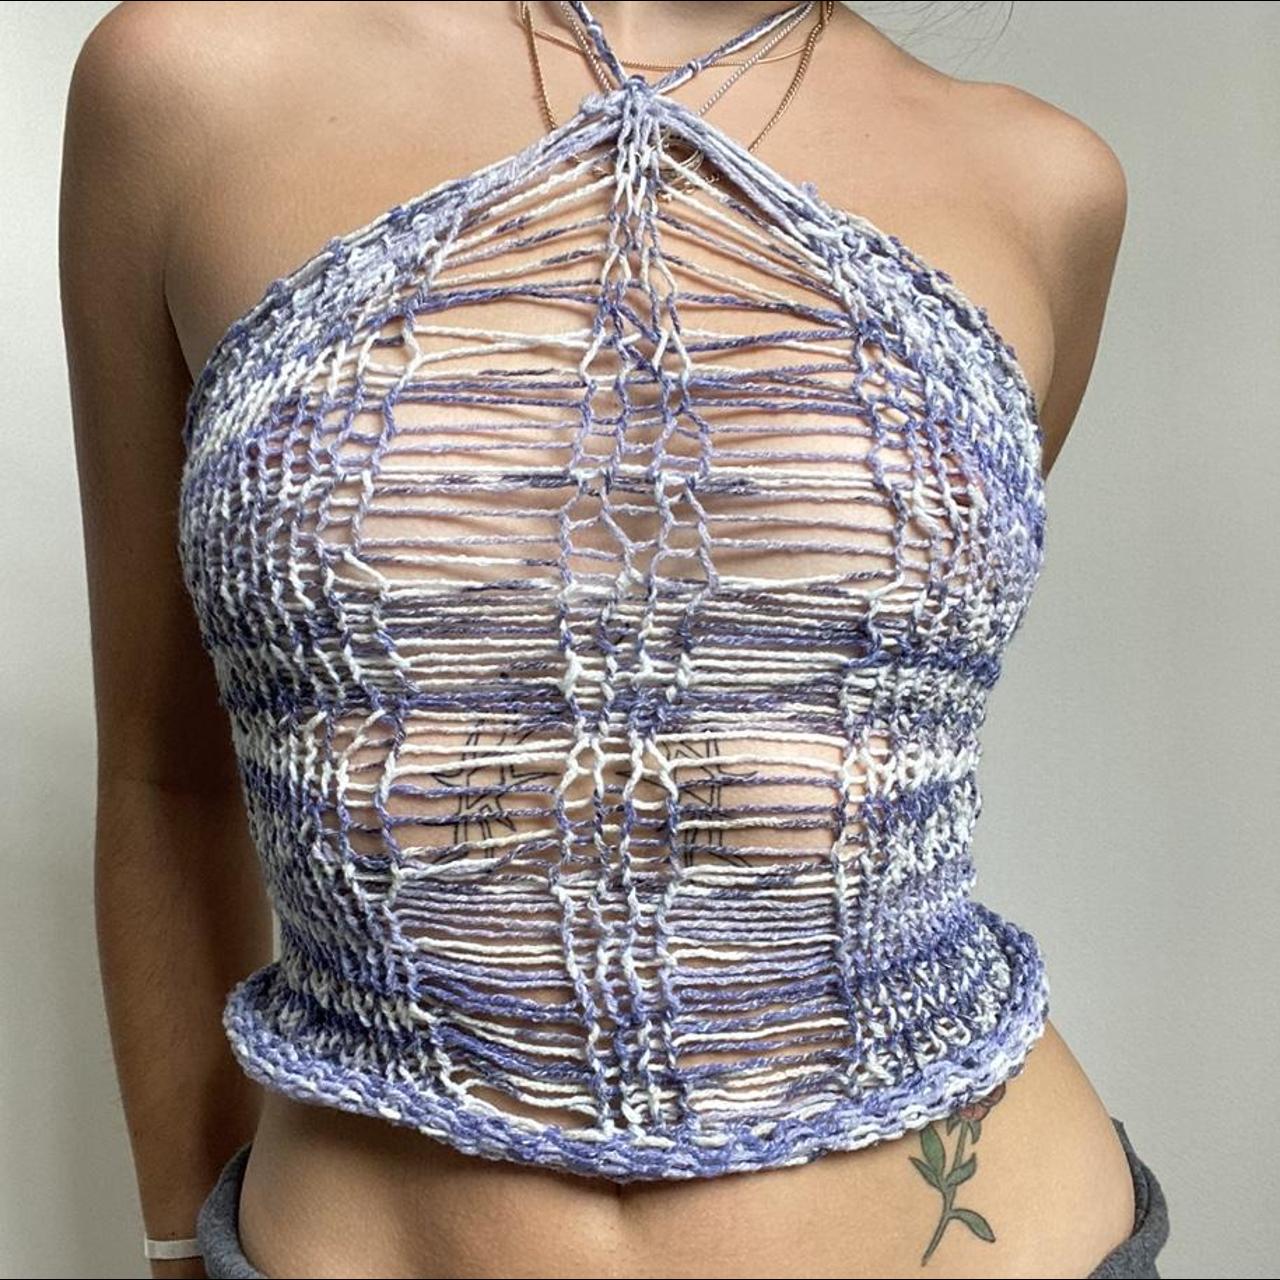 Product Image 2 - purple distressed halter neck top
Handmade